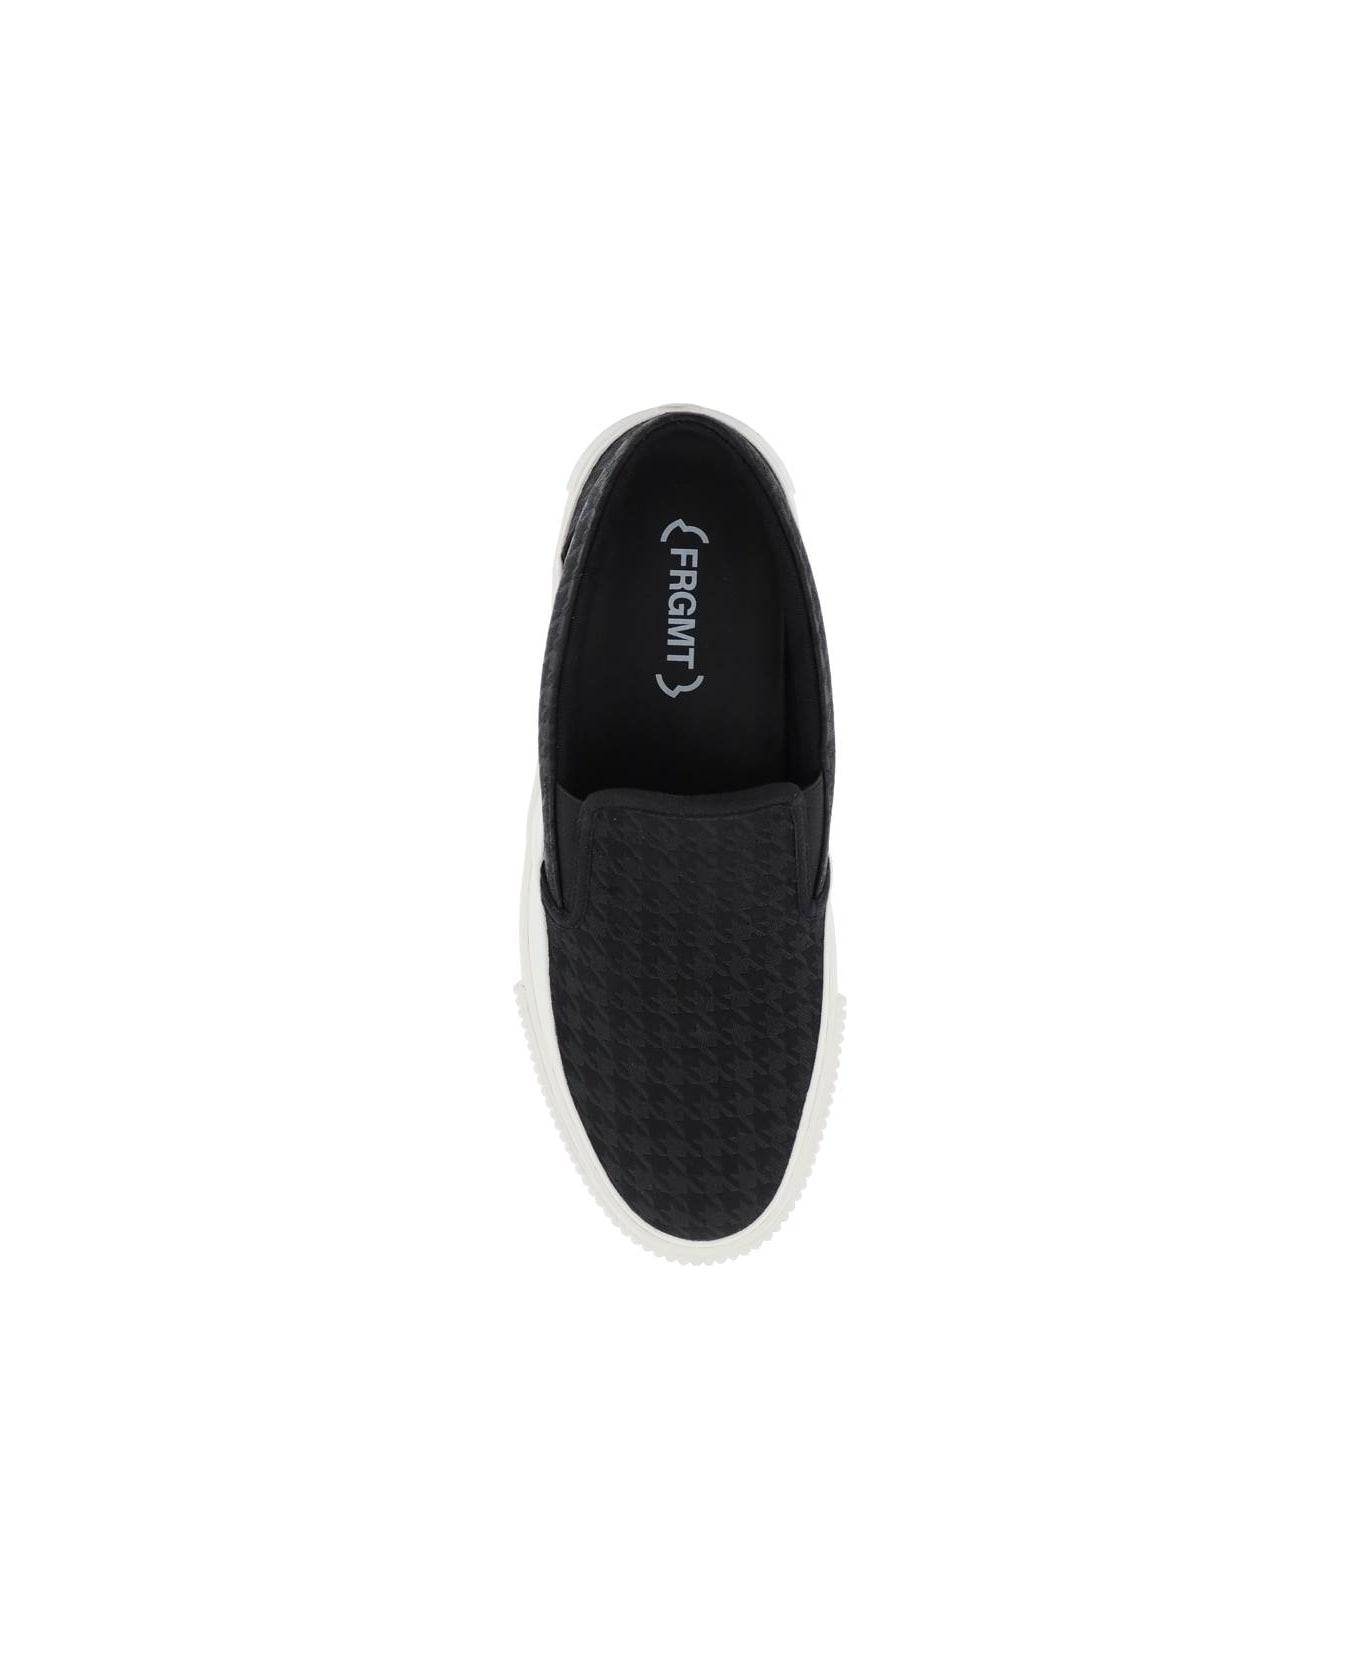 Moncler Genius Houndstooth Canvas Sneakers - Black